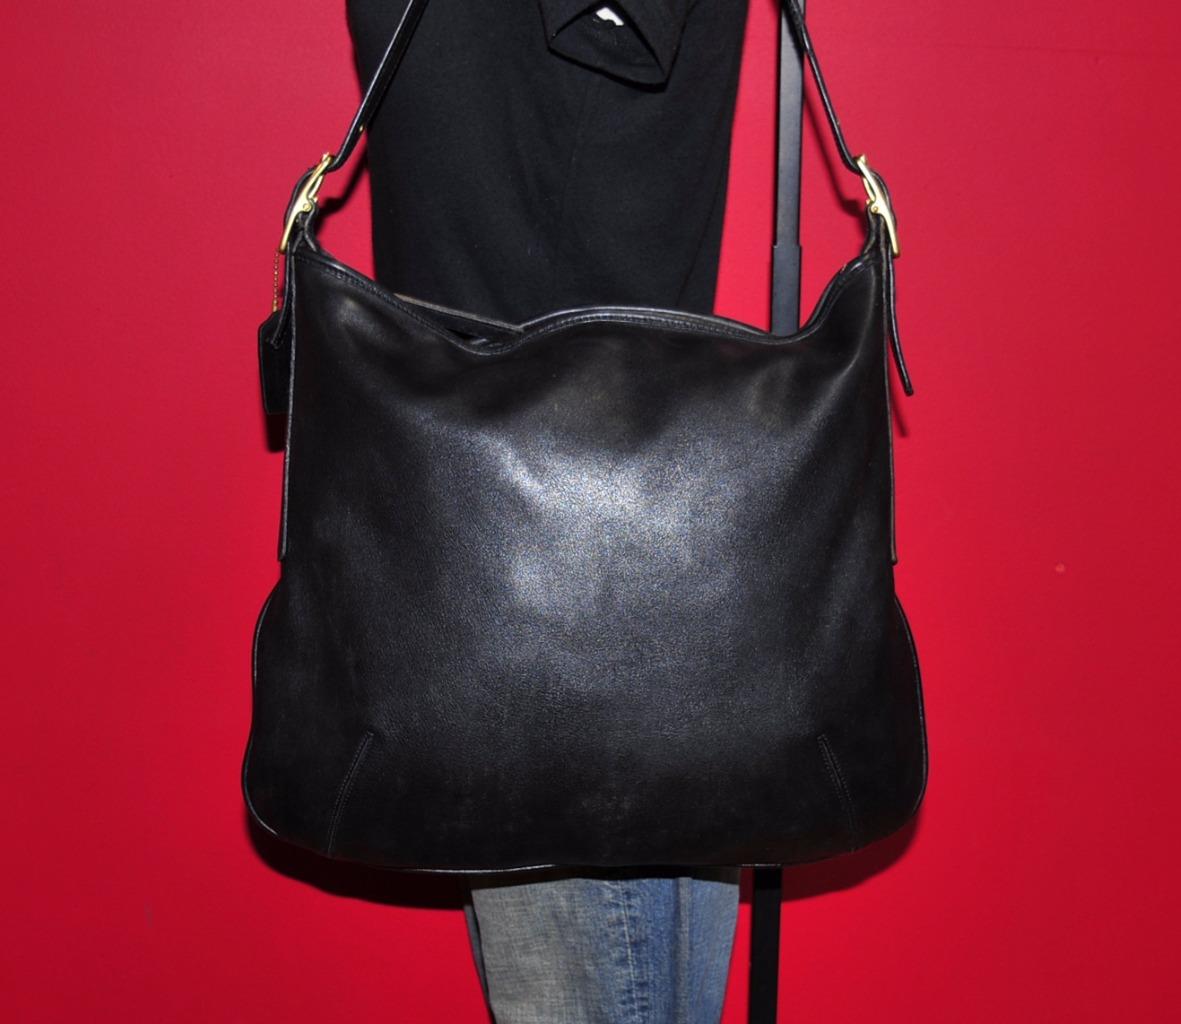 Vintage COACH Large Black Leather Slim Hobo Tote Shopper Purse Bag #9210 USA